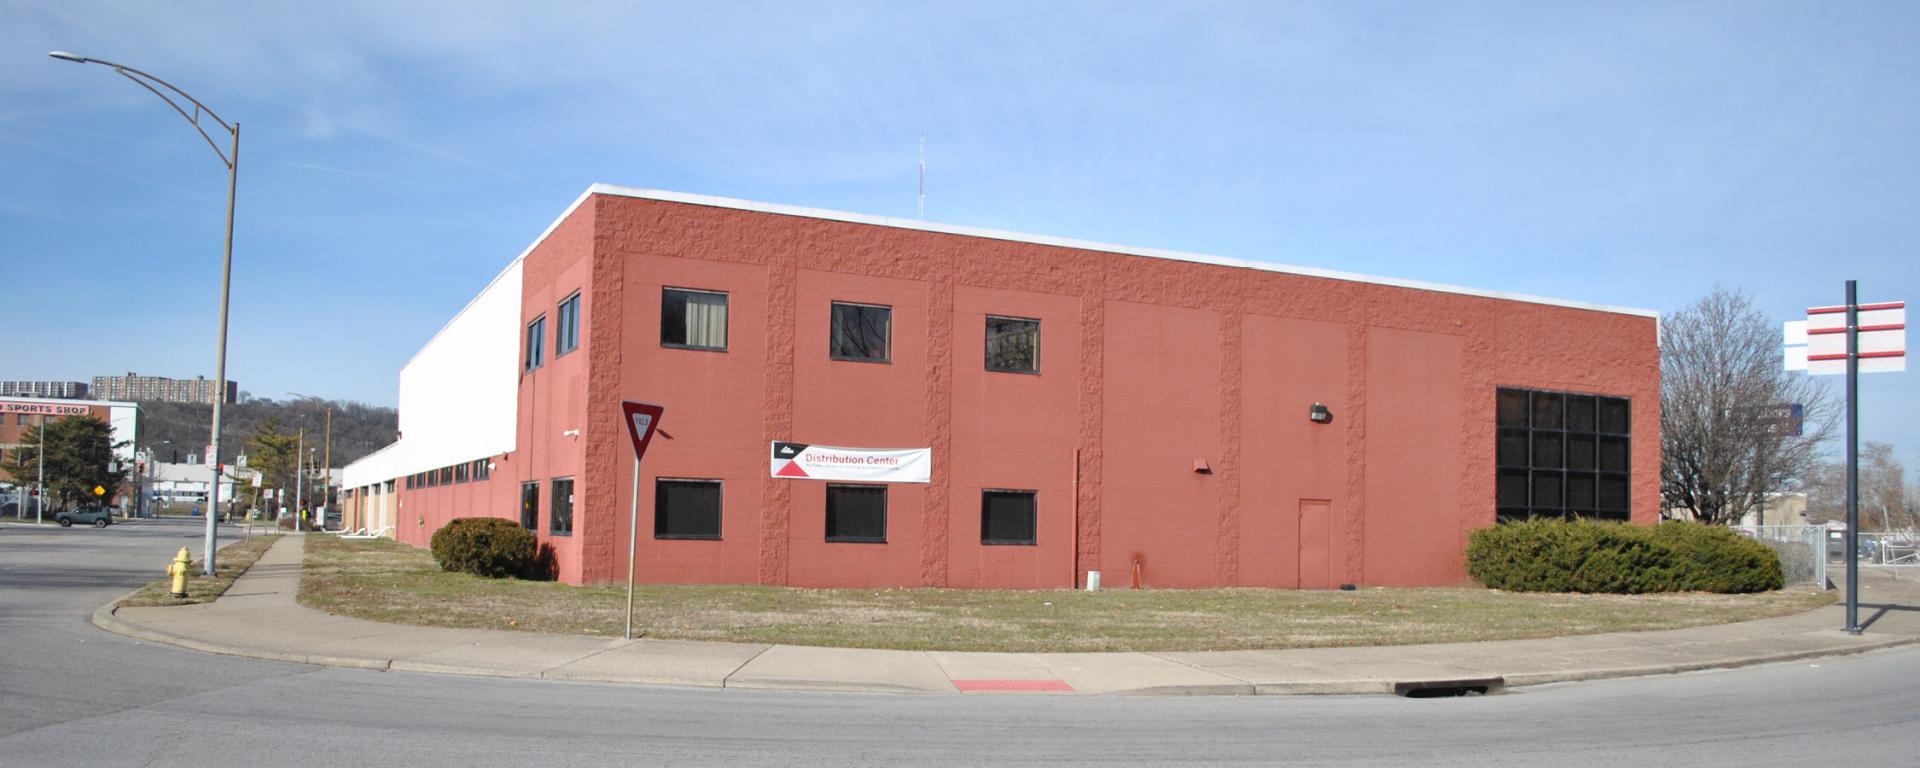 brick distribution center